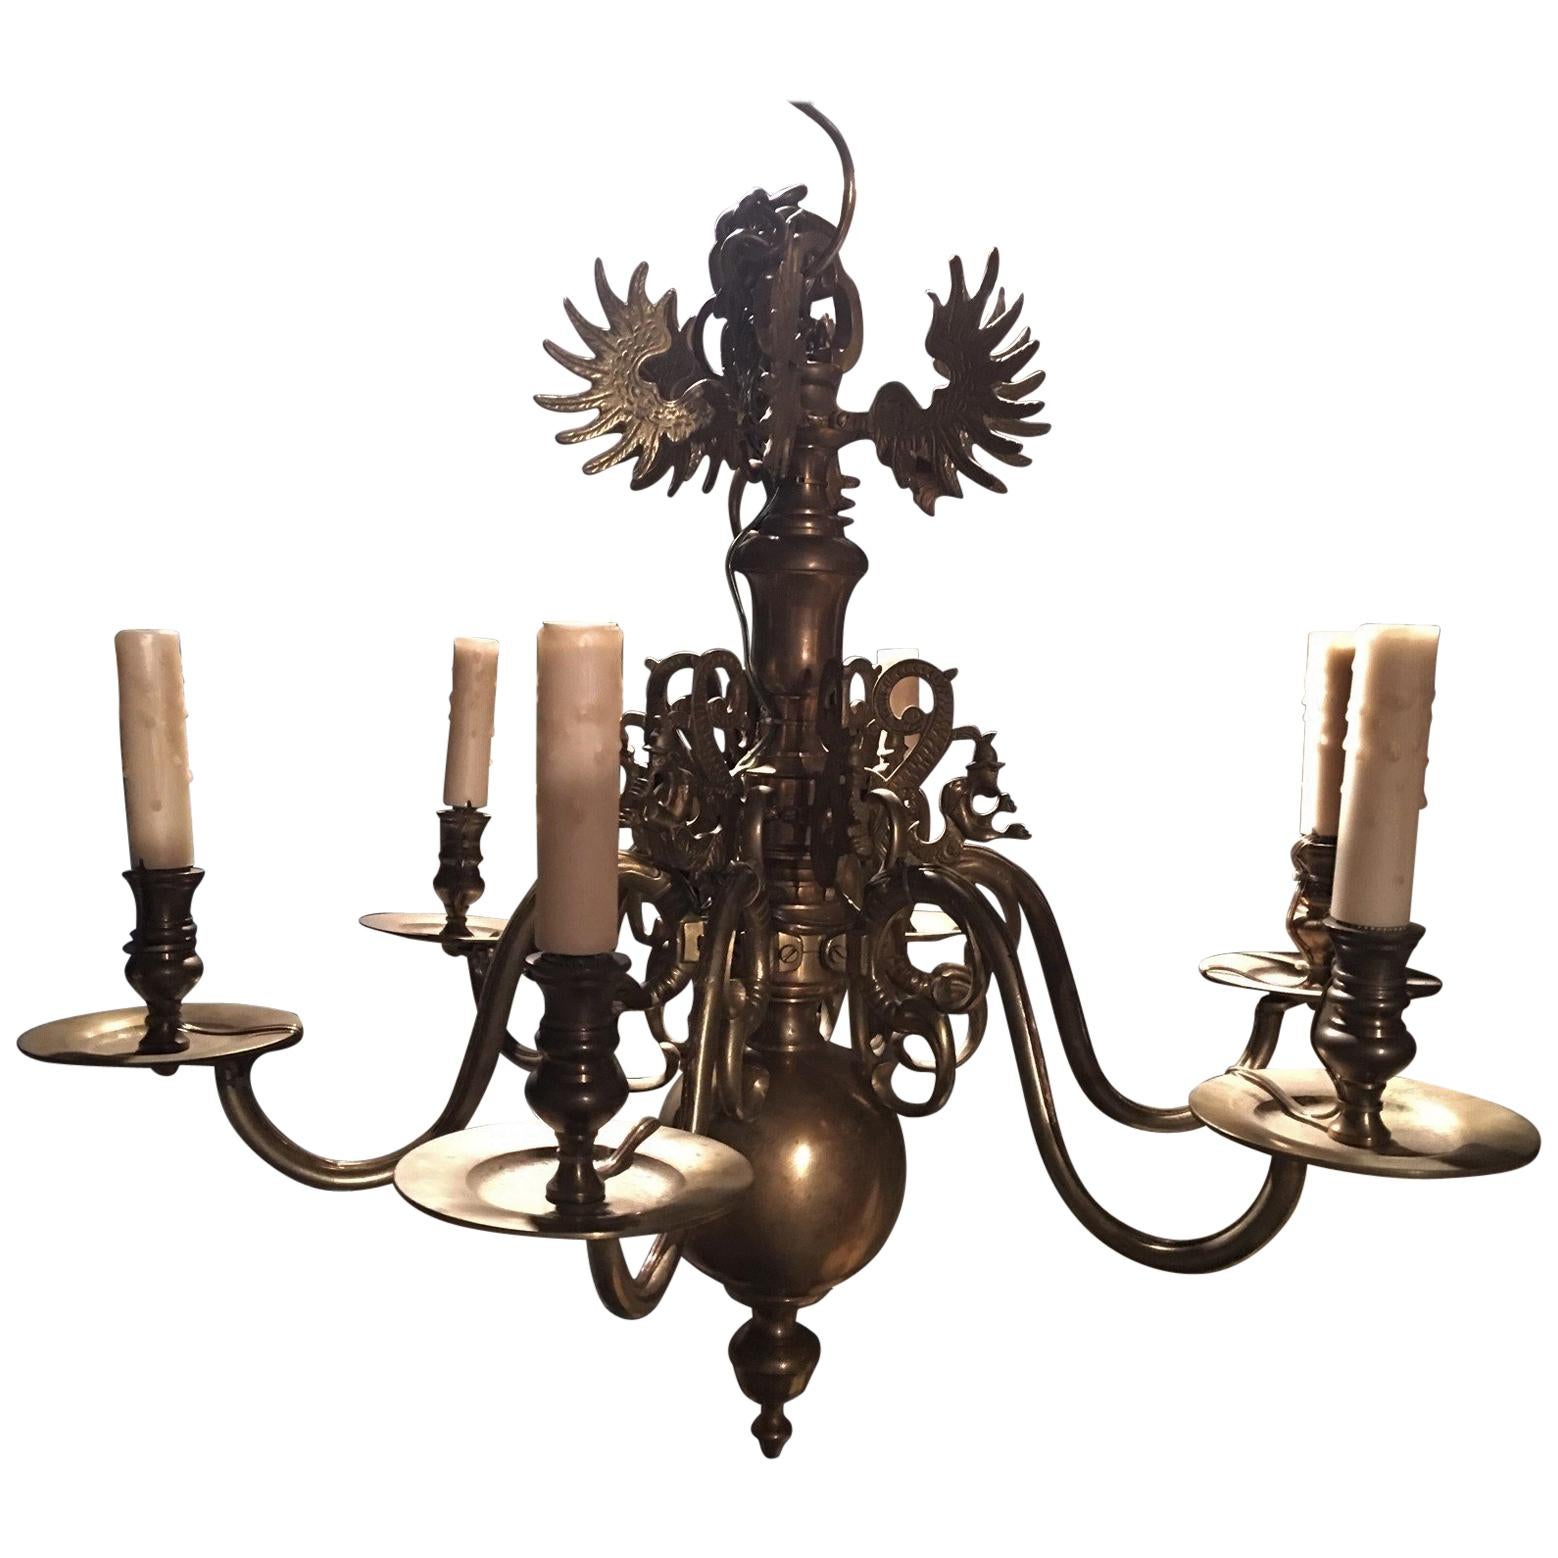 Dutch Style Six-Light Brass Chandelier with Decorative Figures, 19th Century